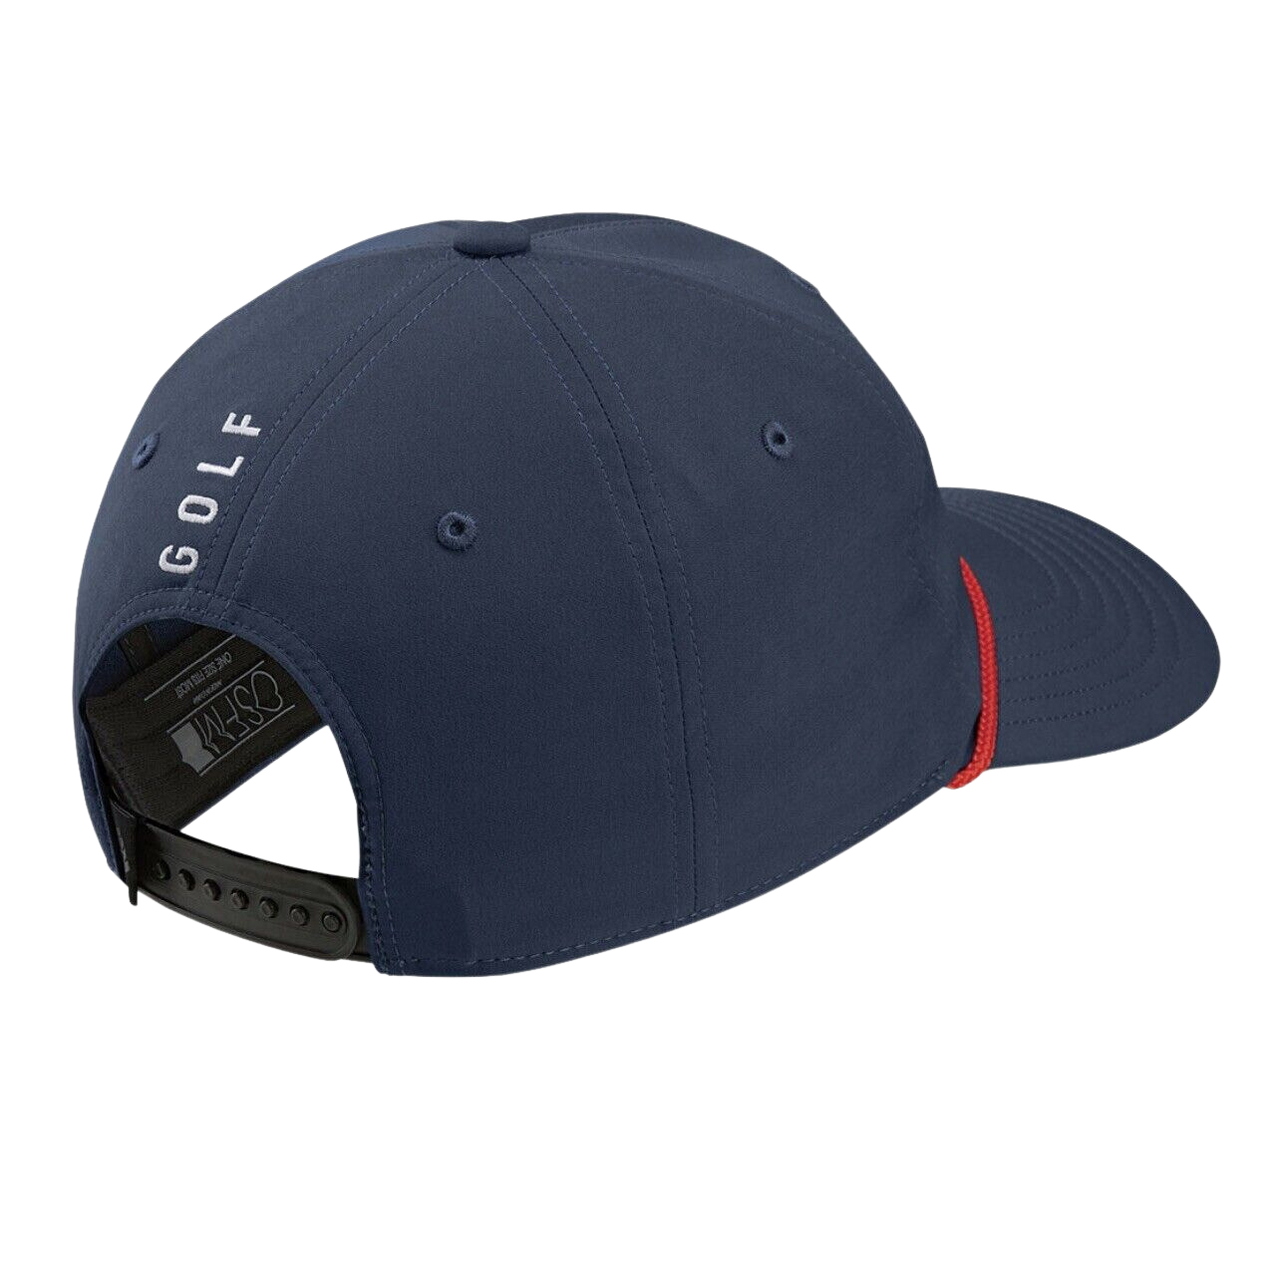 Adidas Patch SnapBack Cap